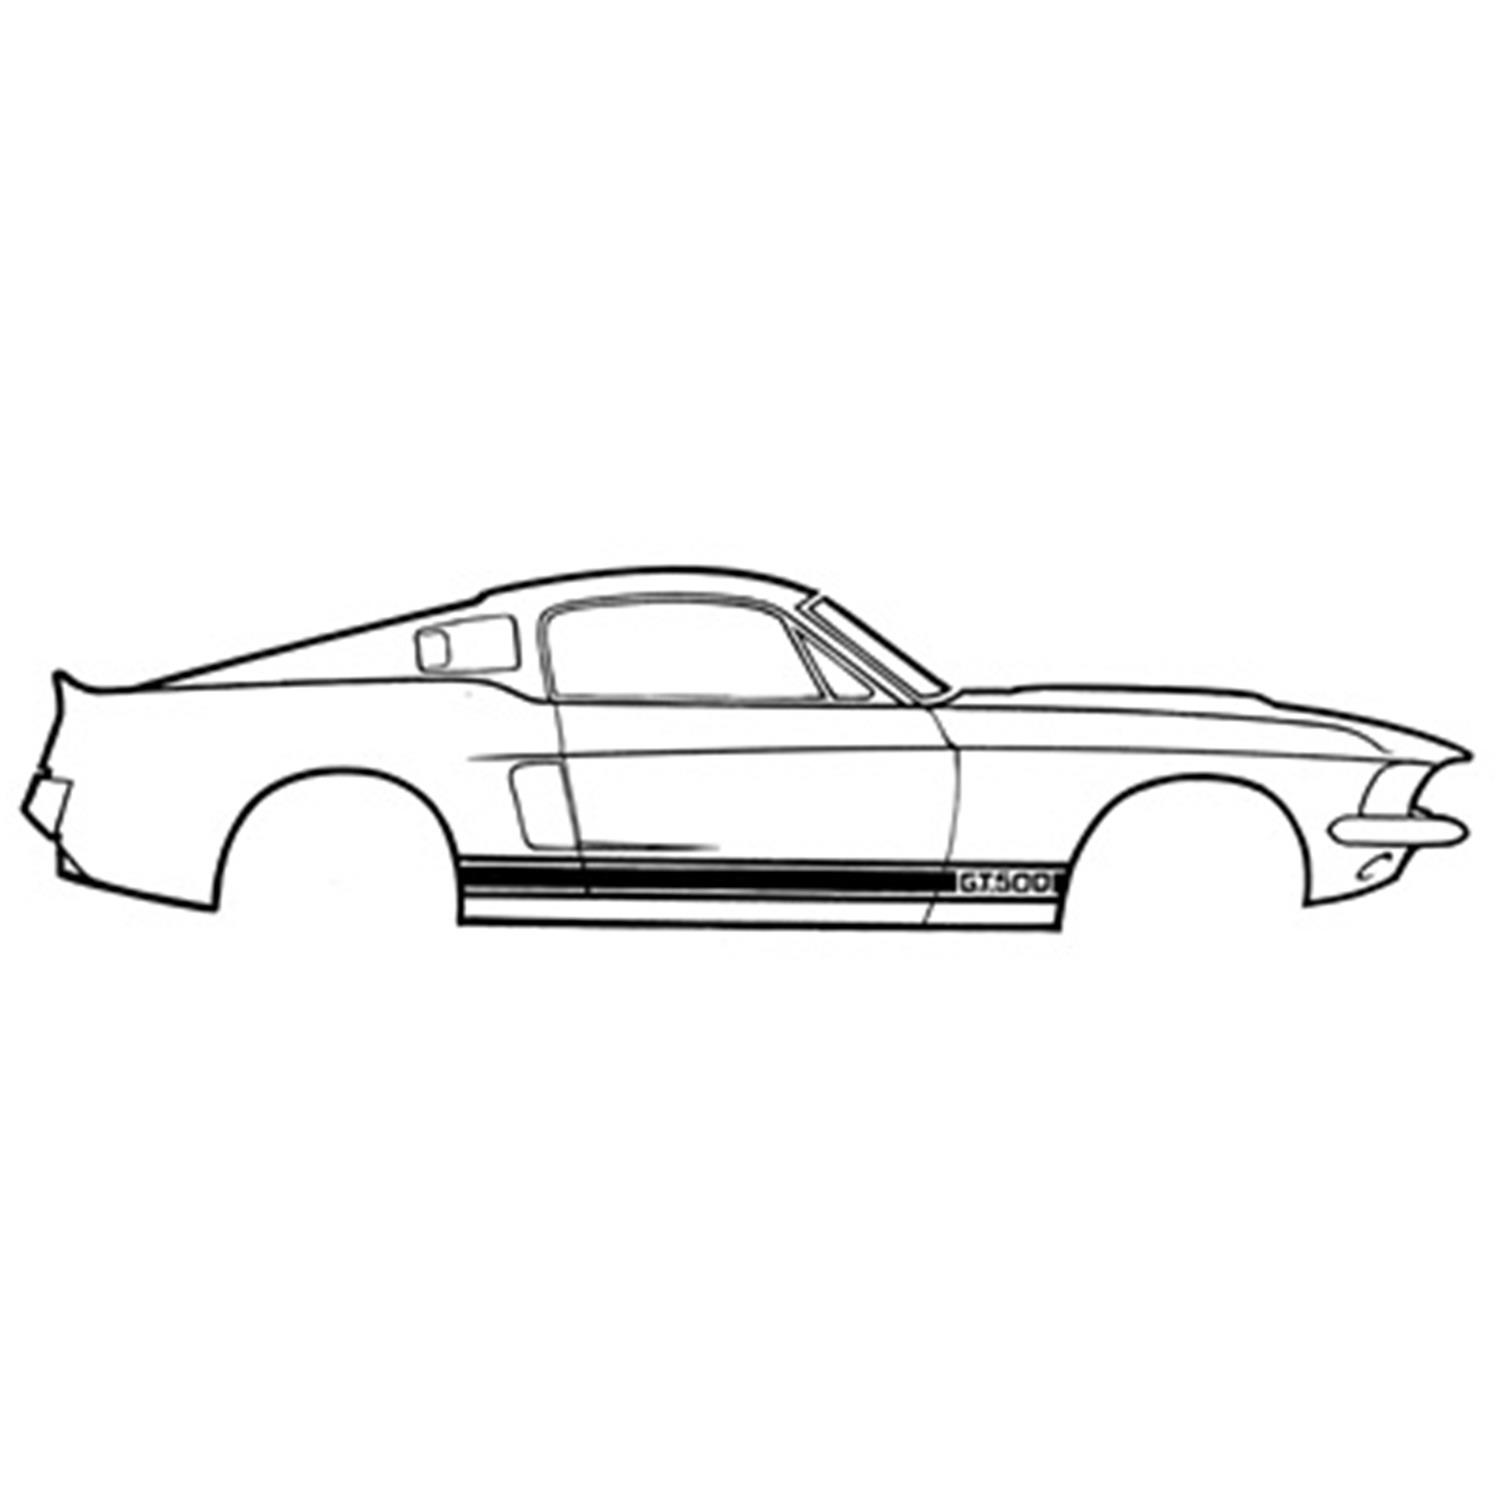 Движение без колес. Ford Mustang gt500 Blueprint. Ford Mustang 1967 чертежи. Ford Mustang Shelby gt500 чертеж. Ford Mustang Shelby gt500 Blueprints.